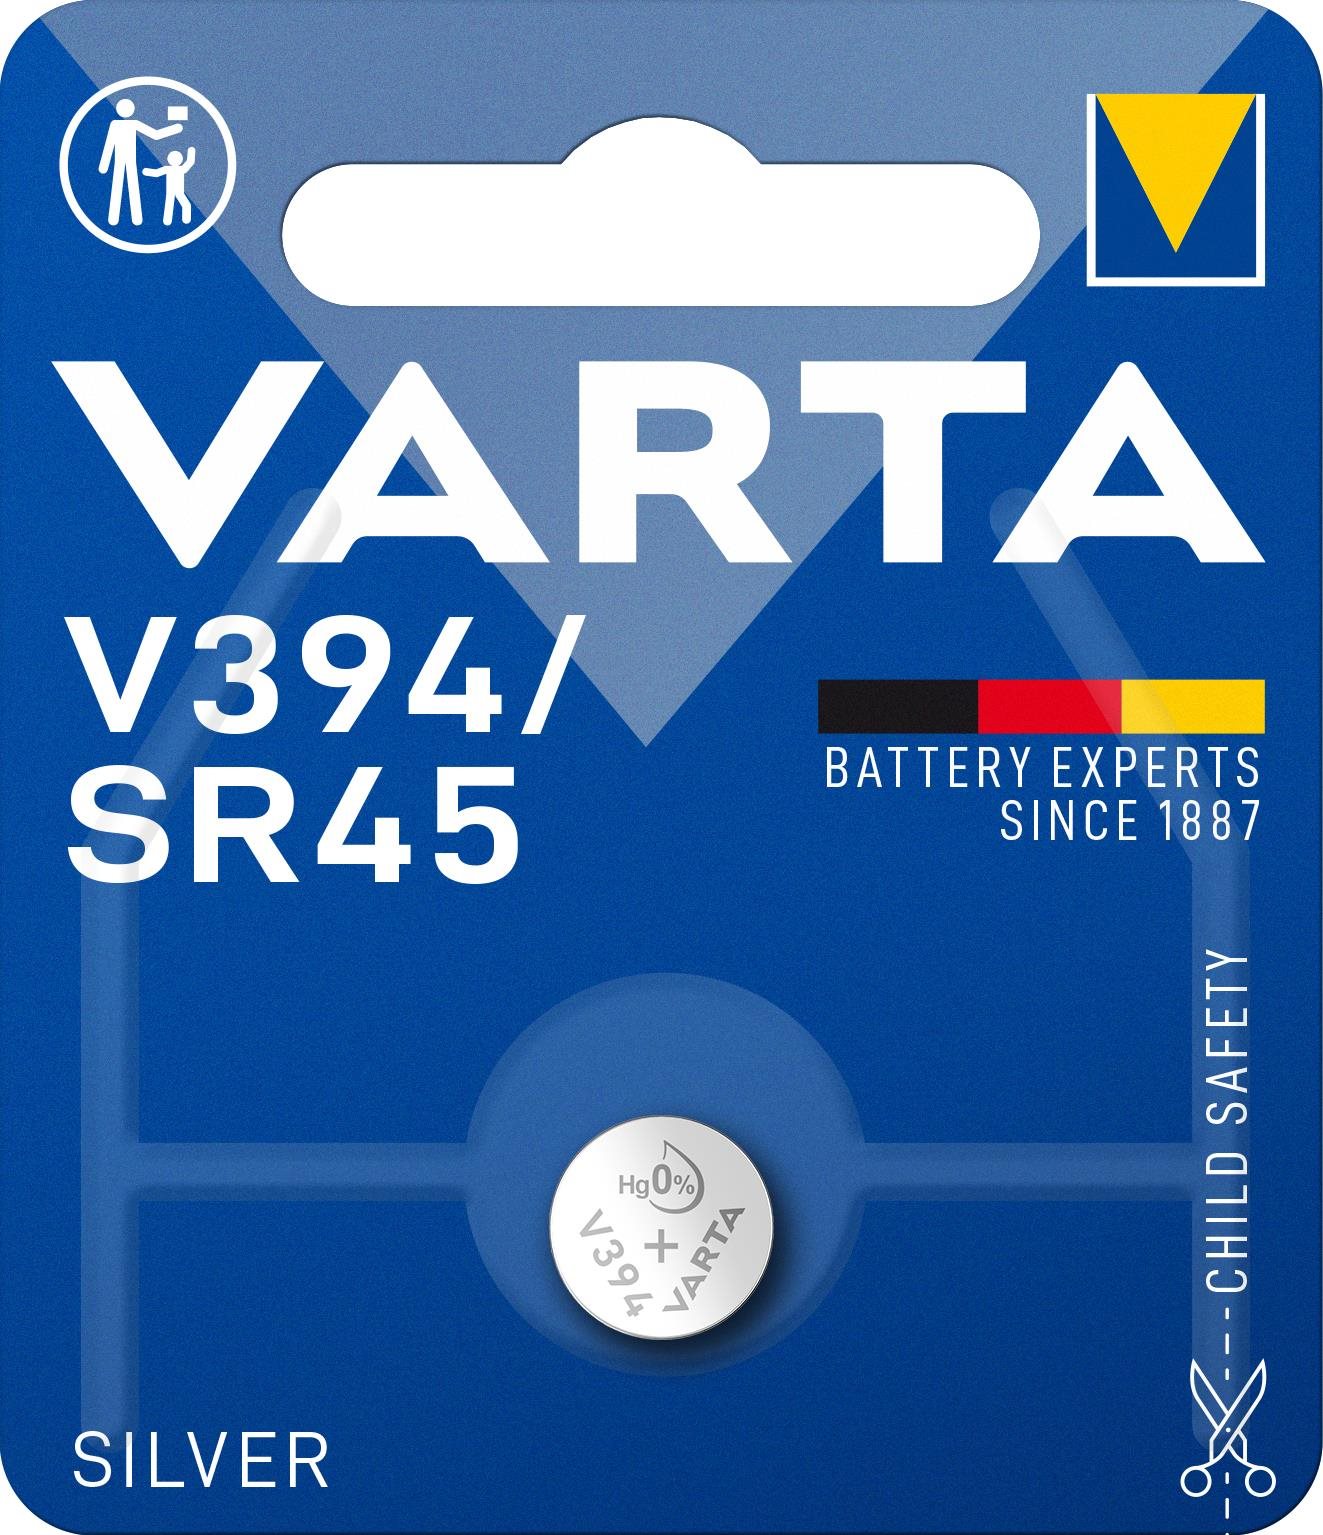 VARTA Speciális ezüst-oxid elem V394/SR45 1 db